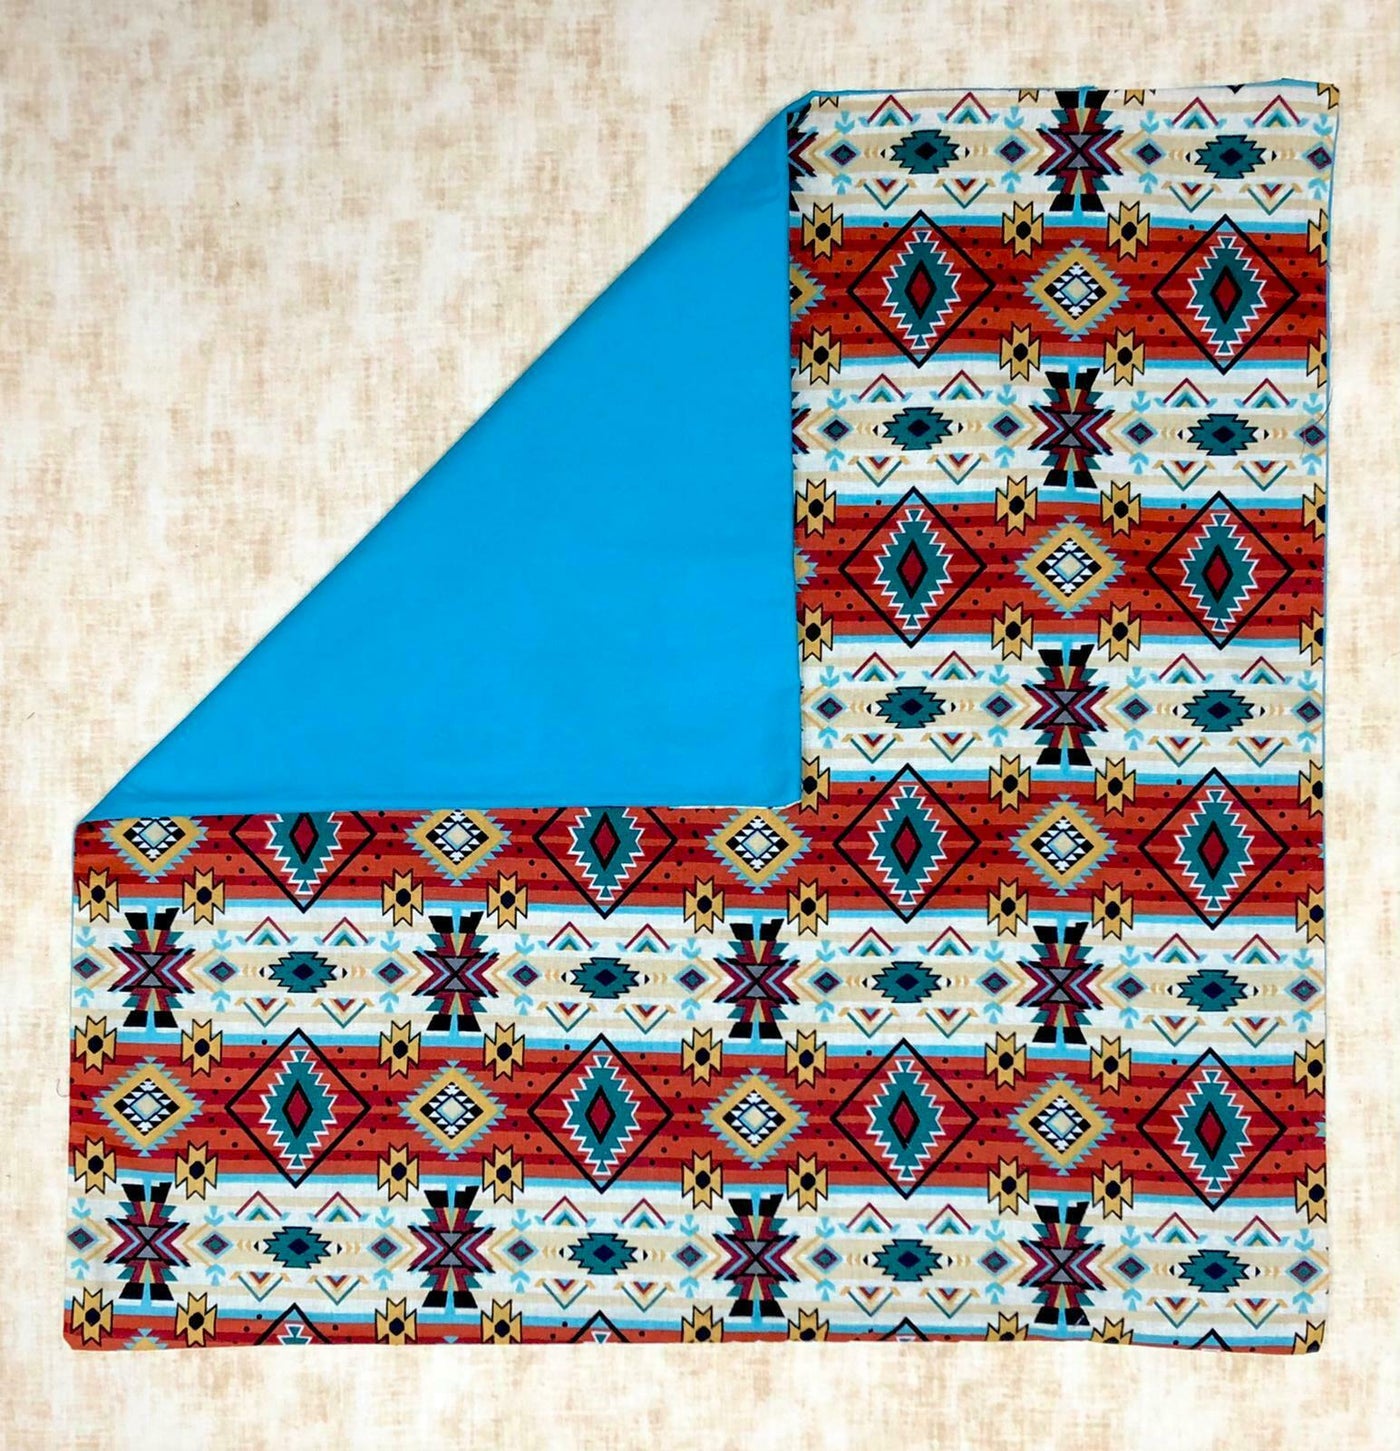 Navajo & Aztec Influenced Cushion Cover - David Textiles - 100% Cotton Fabric